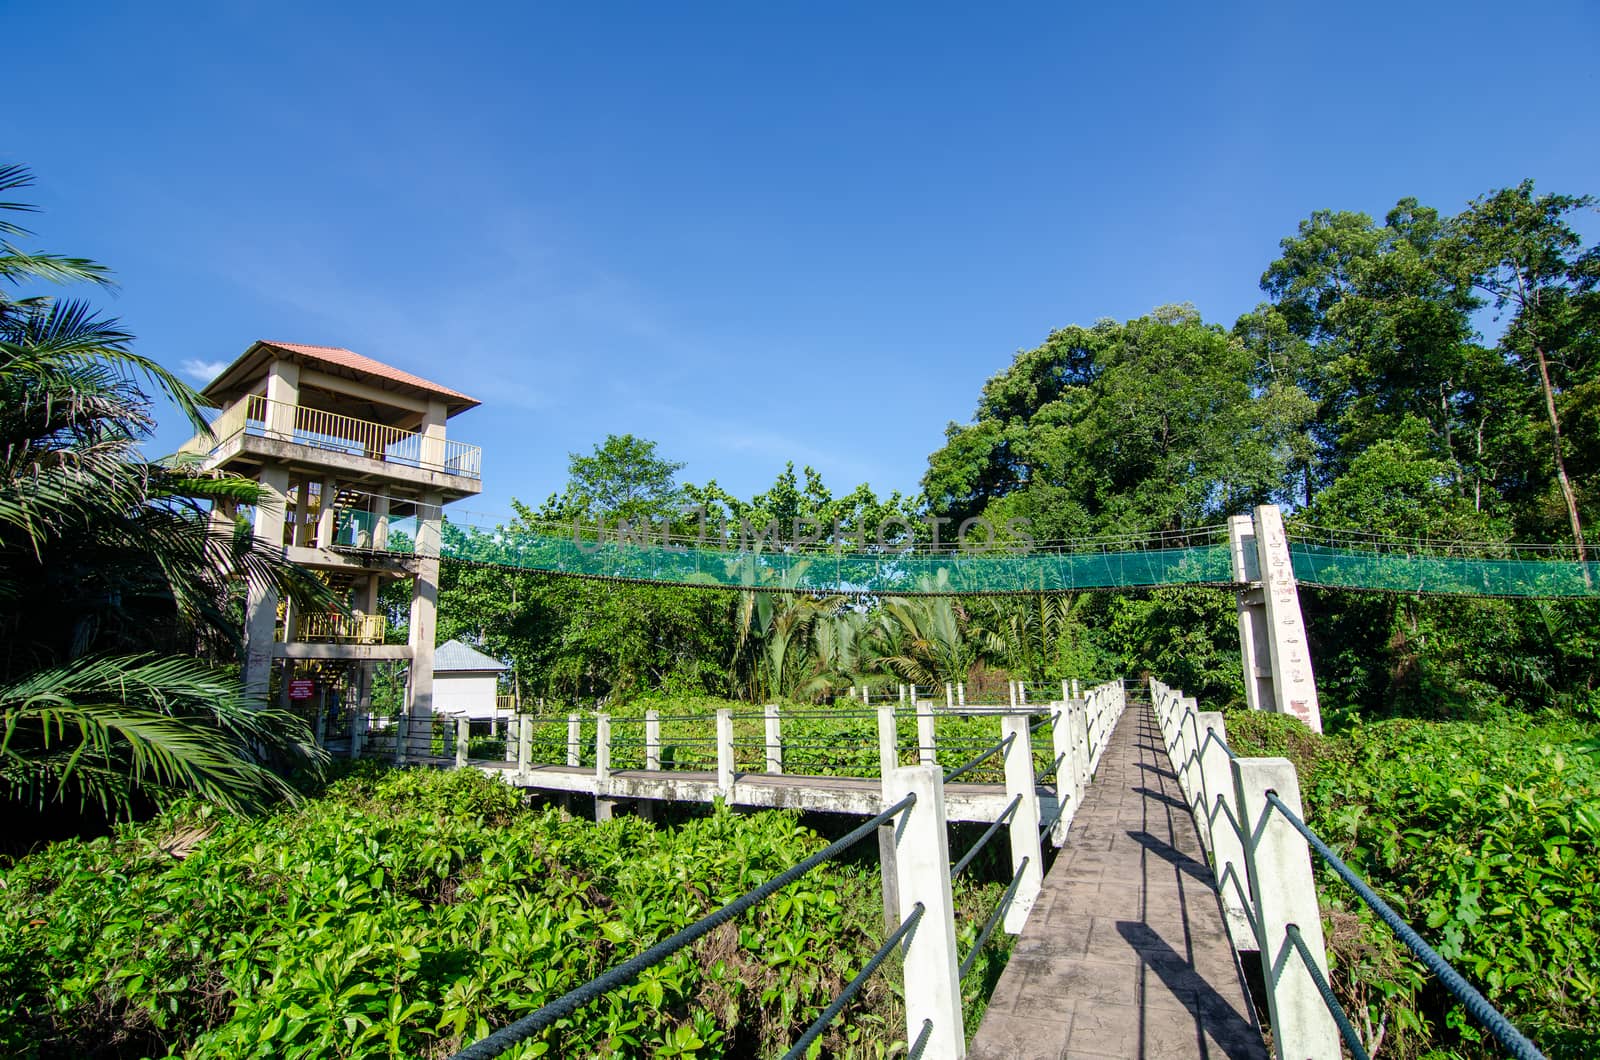 Suspension bridge at Air Hitam Dalam Educational Forest at Penang, Malaysia in hot blue sky.